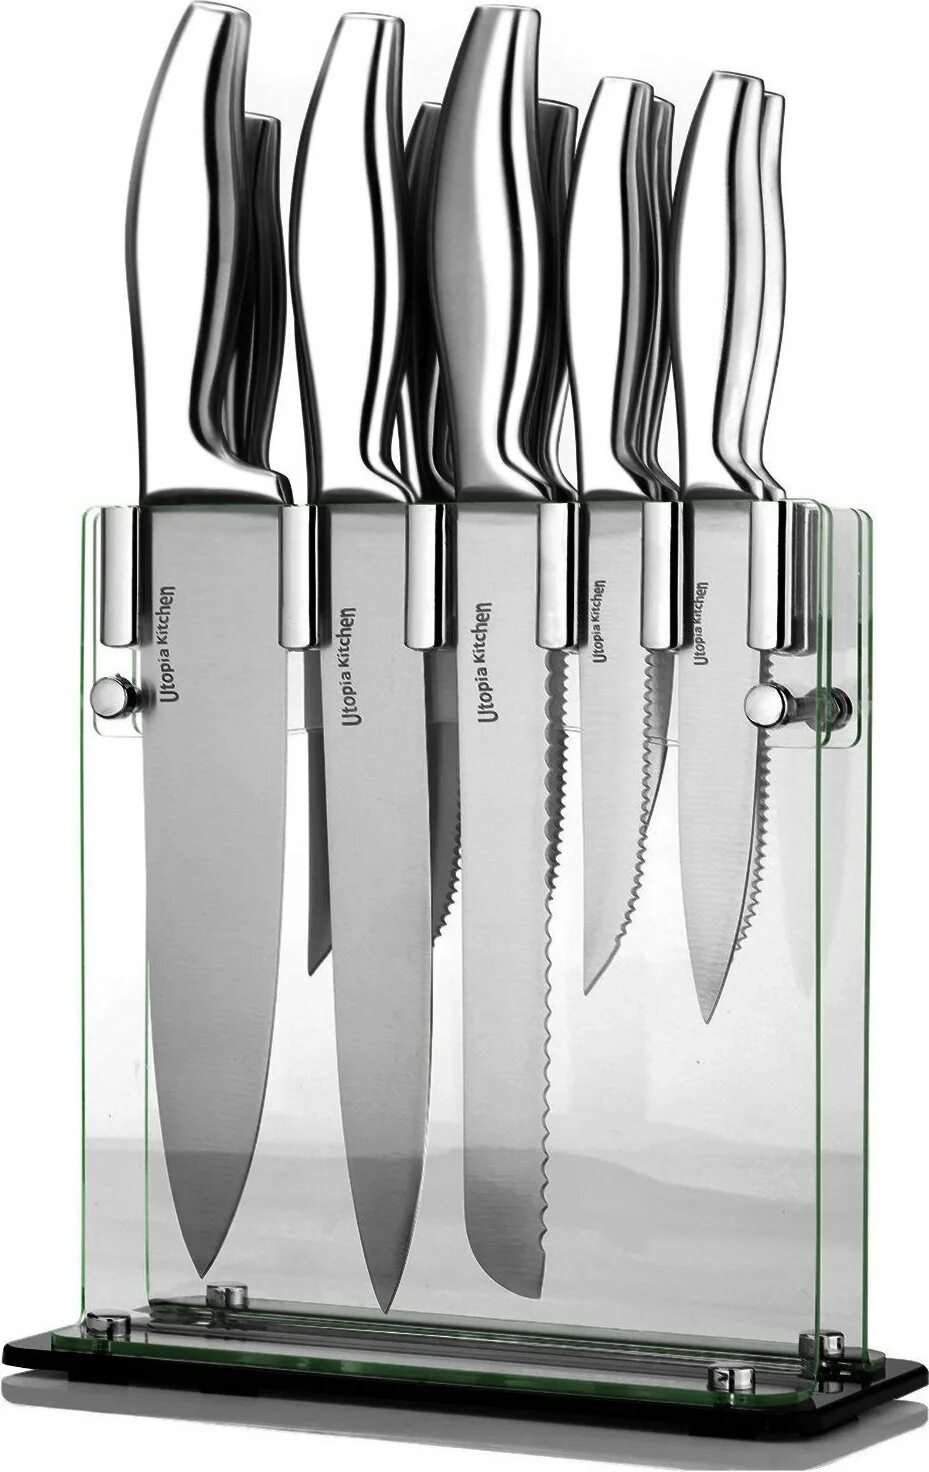 Ножи кухонные взять. Ножи Kitchen Knife Stainless Steel. Нож кухонный “Stainless Steel” 2386. Kitchenware Stainless Steel кухонный набор. Cook German Stainless Steel ножи.